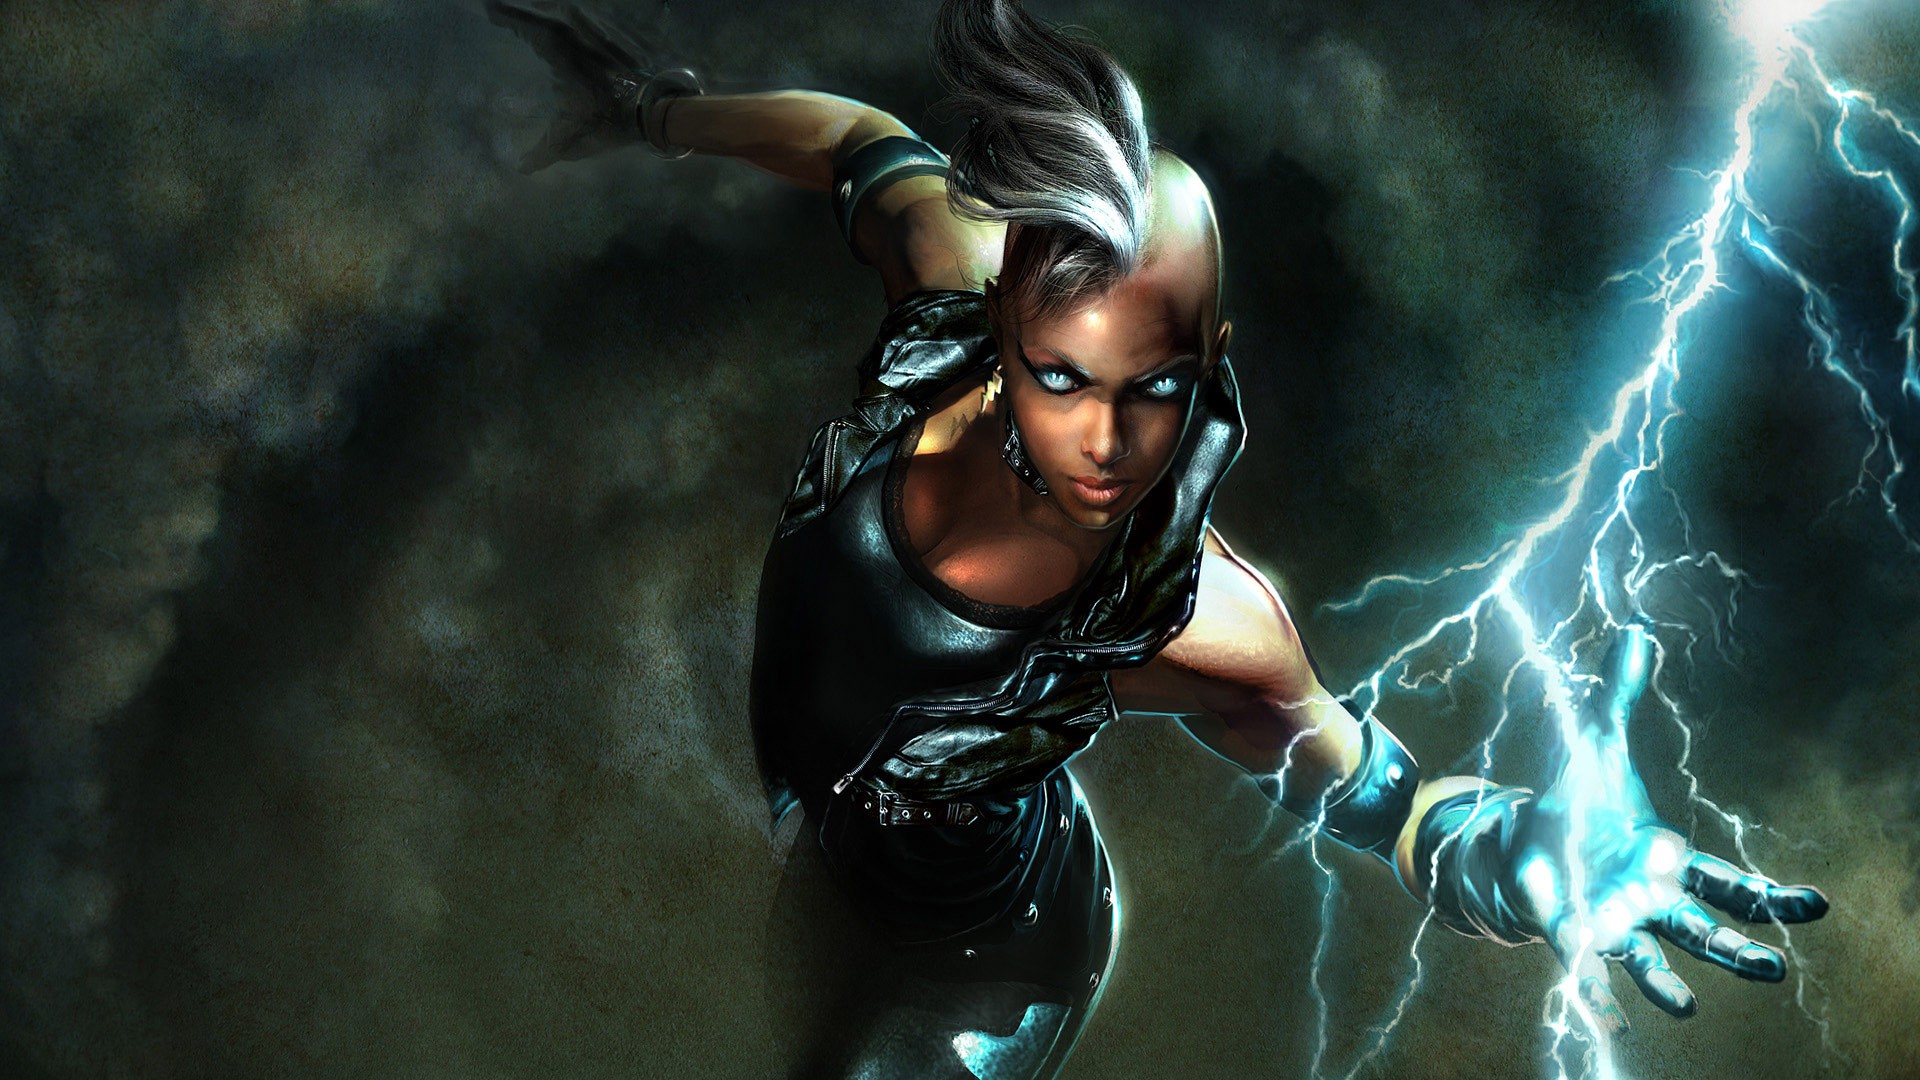 General 1920x1080 Marvel Comics Storm (character) superheroines X-Men women boobs artwork glowing eyes lightning